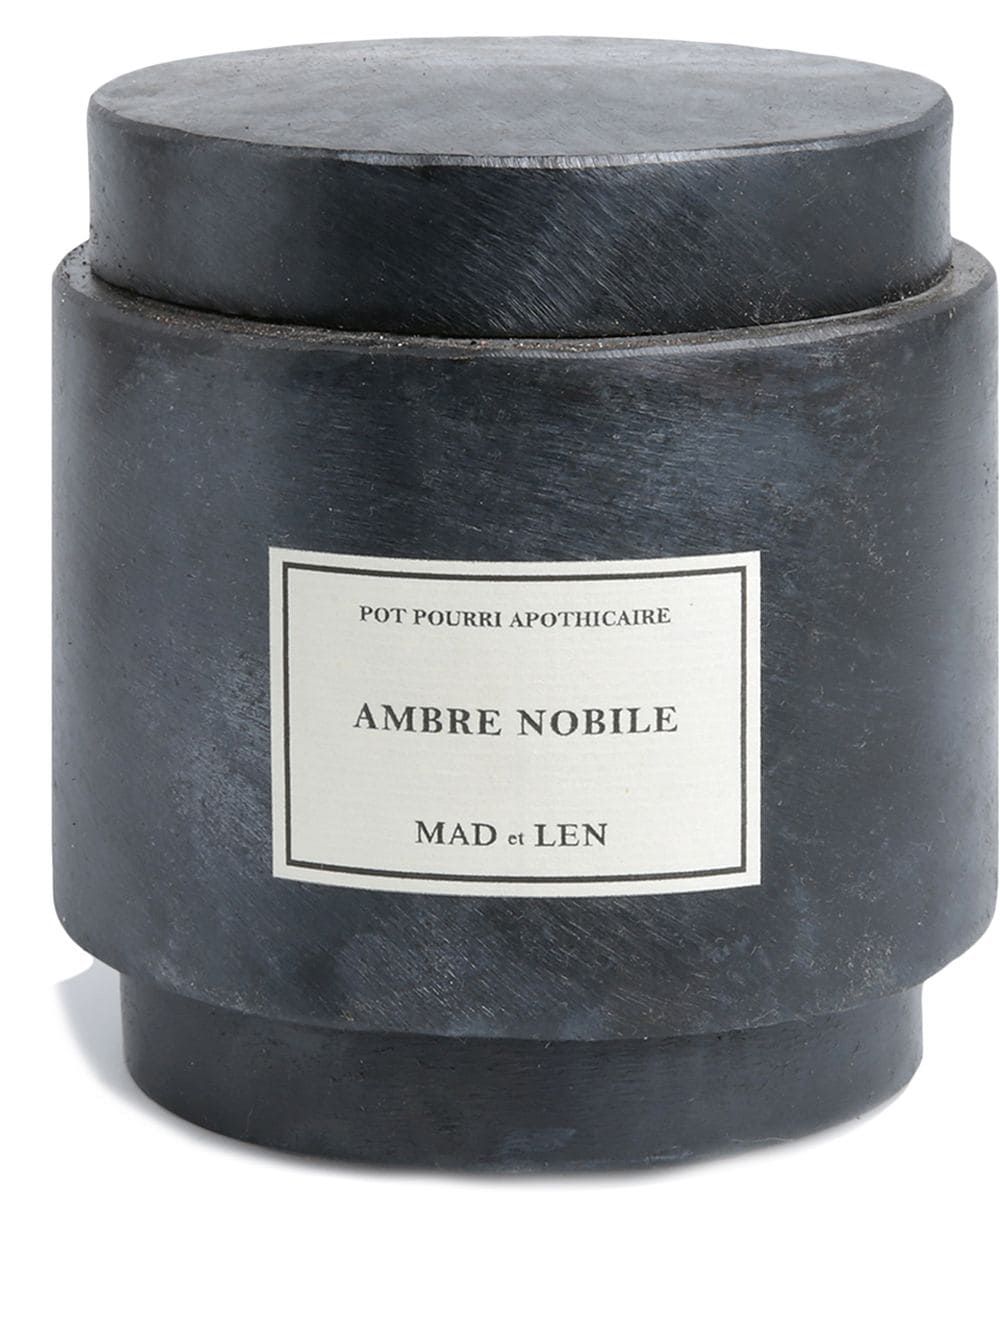 MAD Et LEN Ambre Nobile Monarchia Pot Pourri (300g) - Farfetch | Farfetch Global